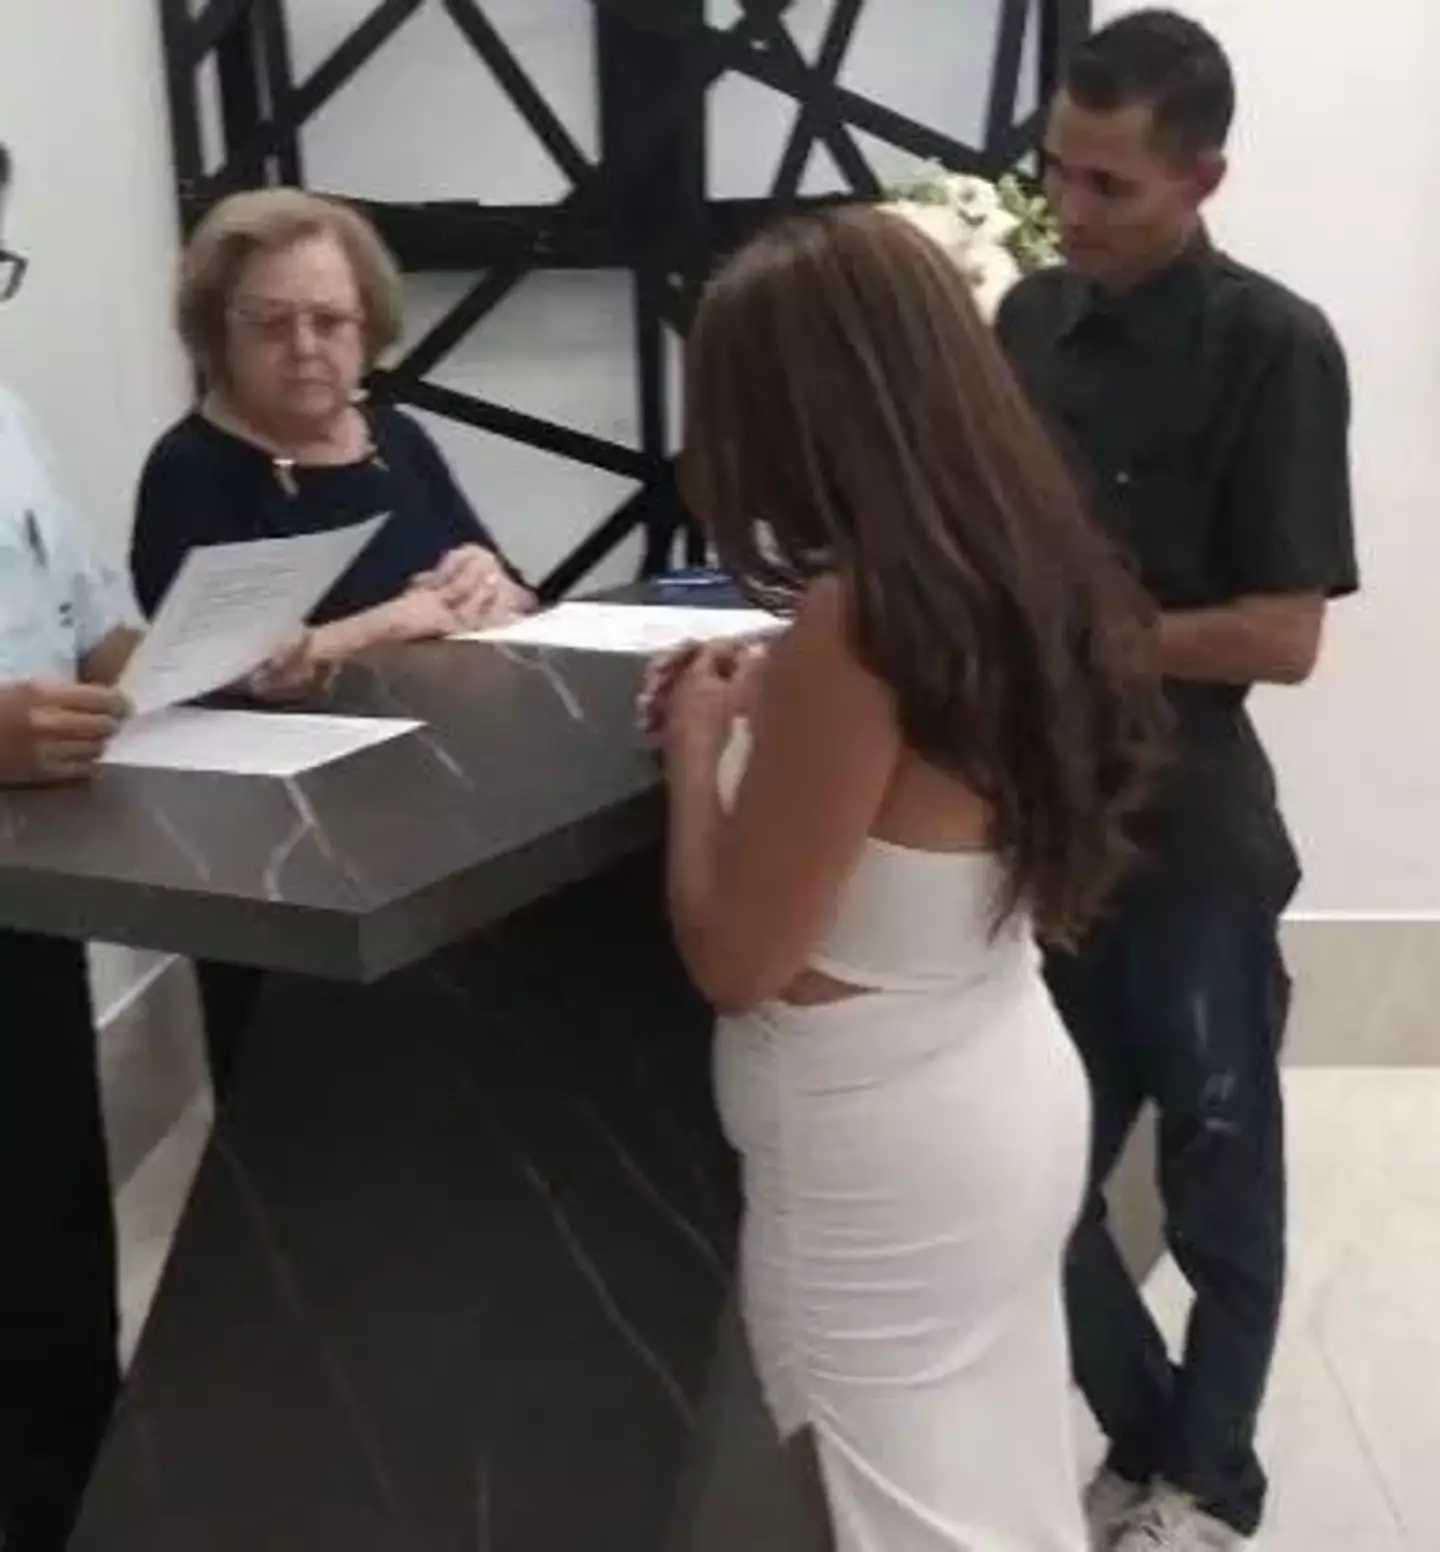 Elisangela was pictured signing paperwork at her wedding hours earlier (Zhivko Mironov)